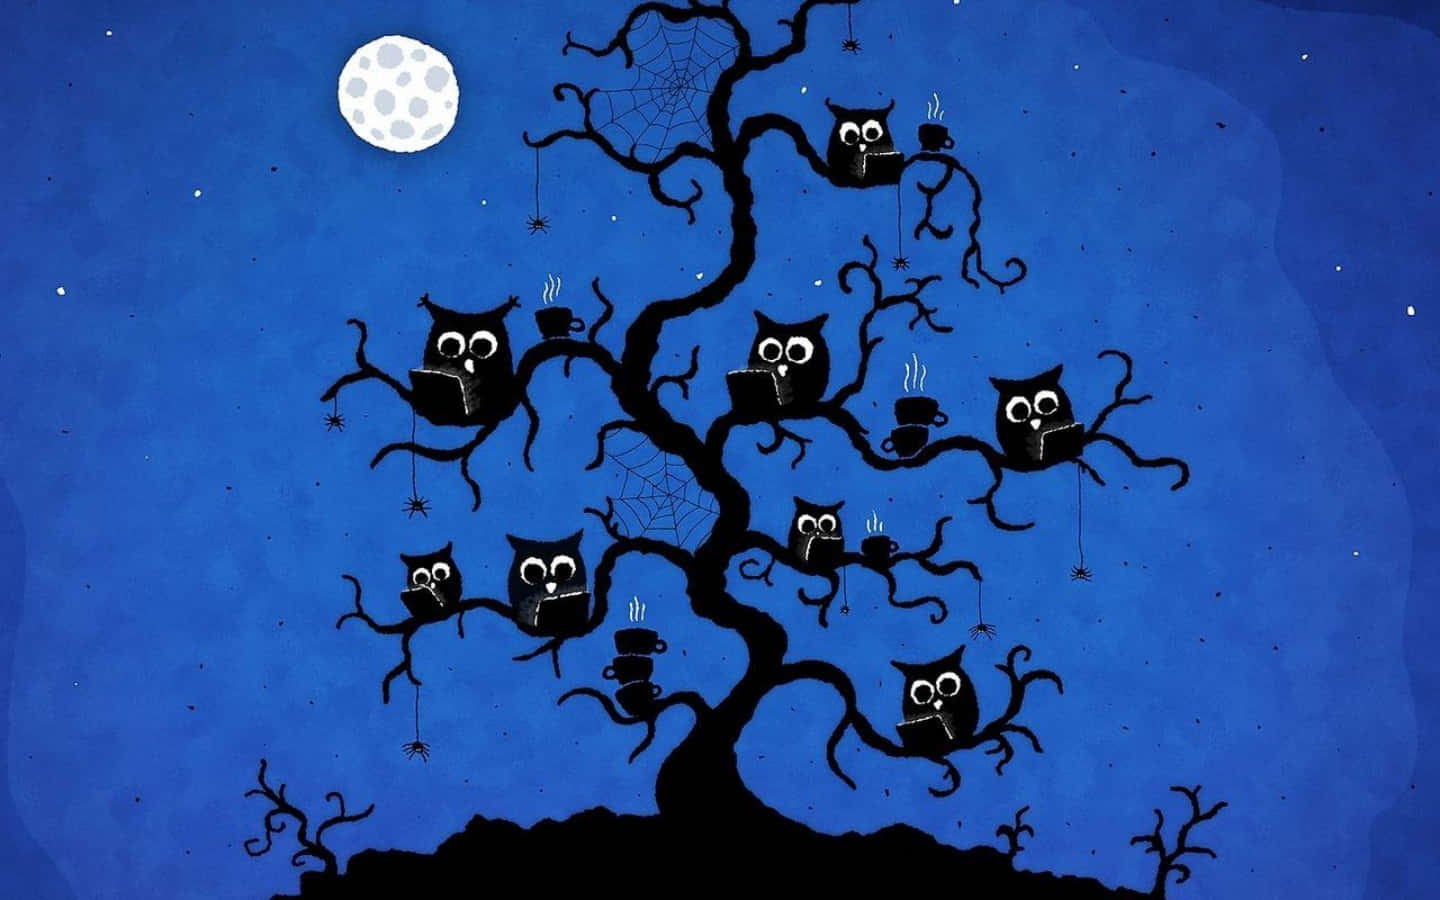 Halloweenfigurer Av Ugglor På Ett Träd På Natten.